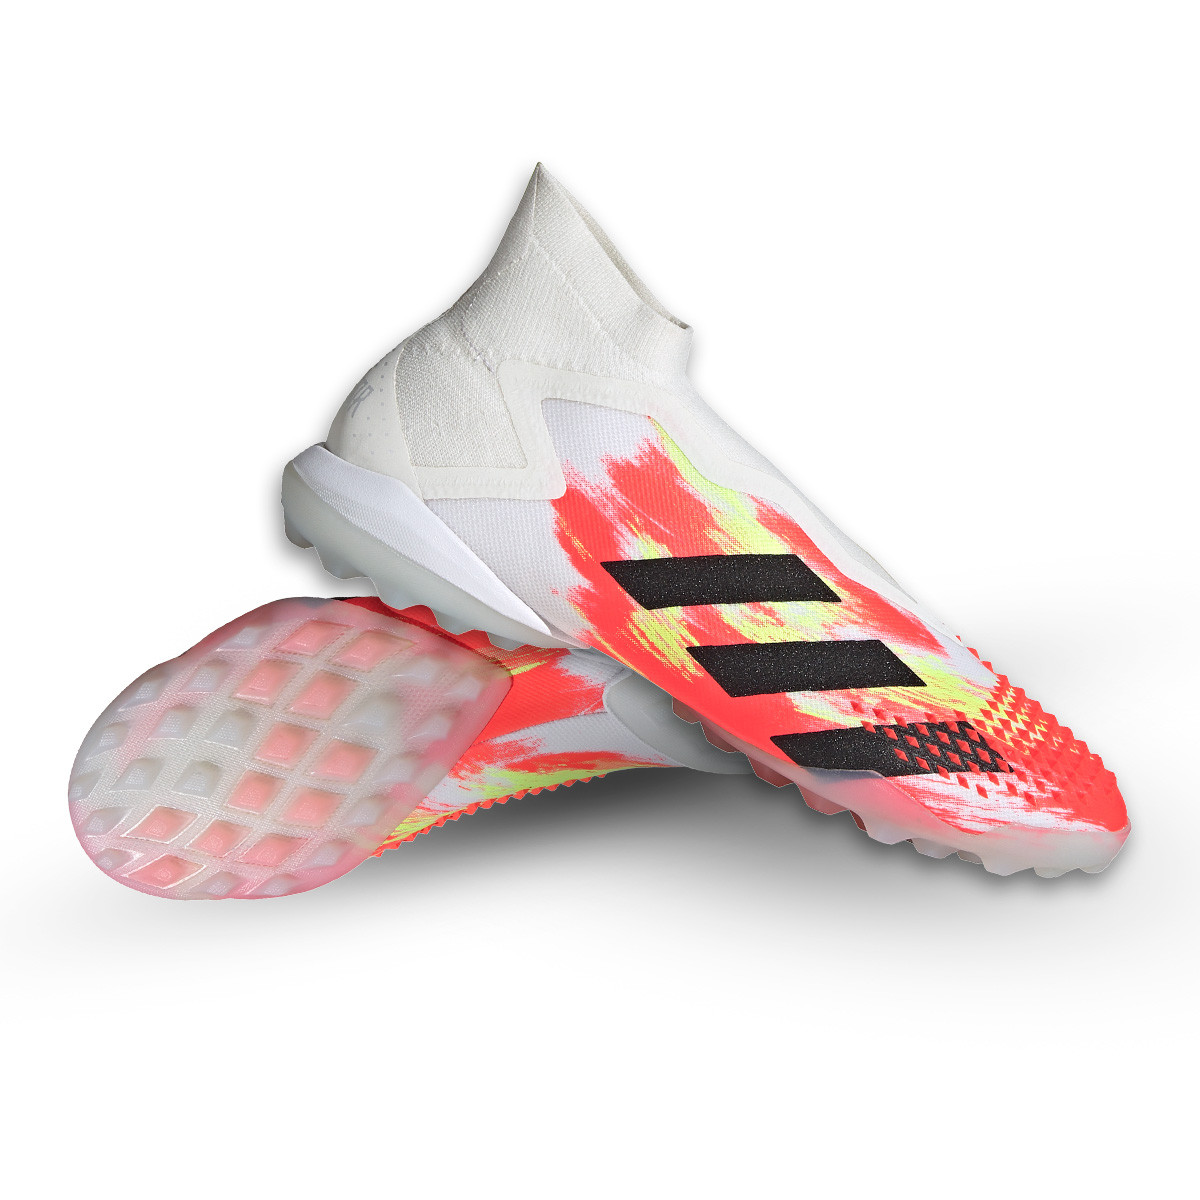 adidas predator mutator 20.1 soft ground footbalm boot